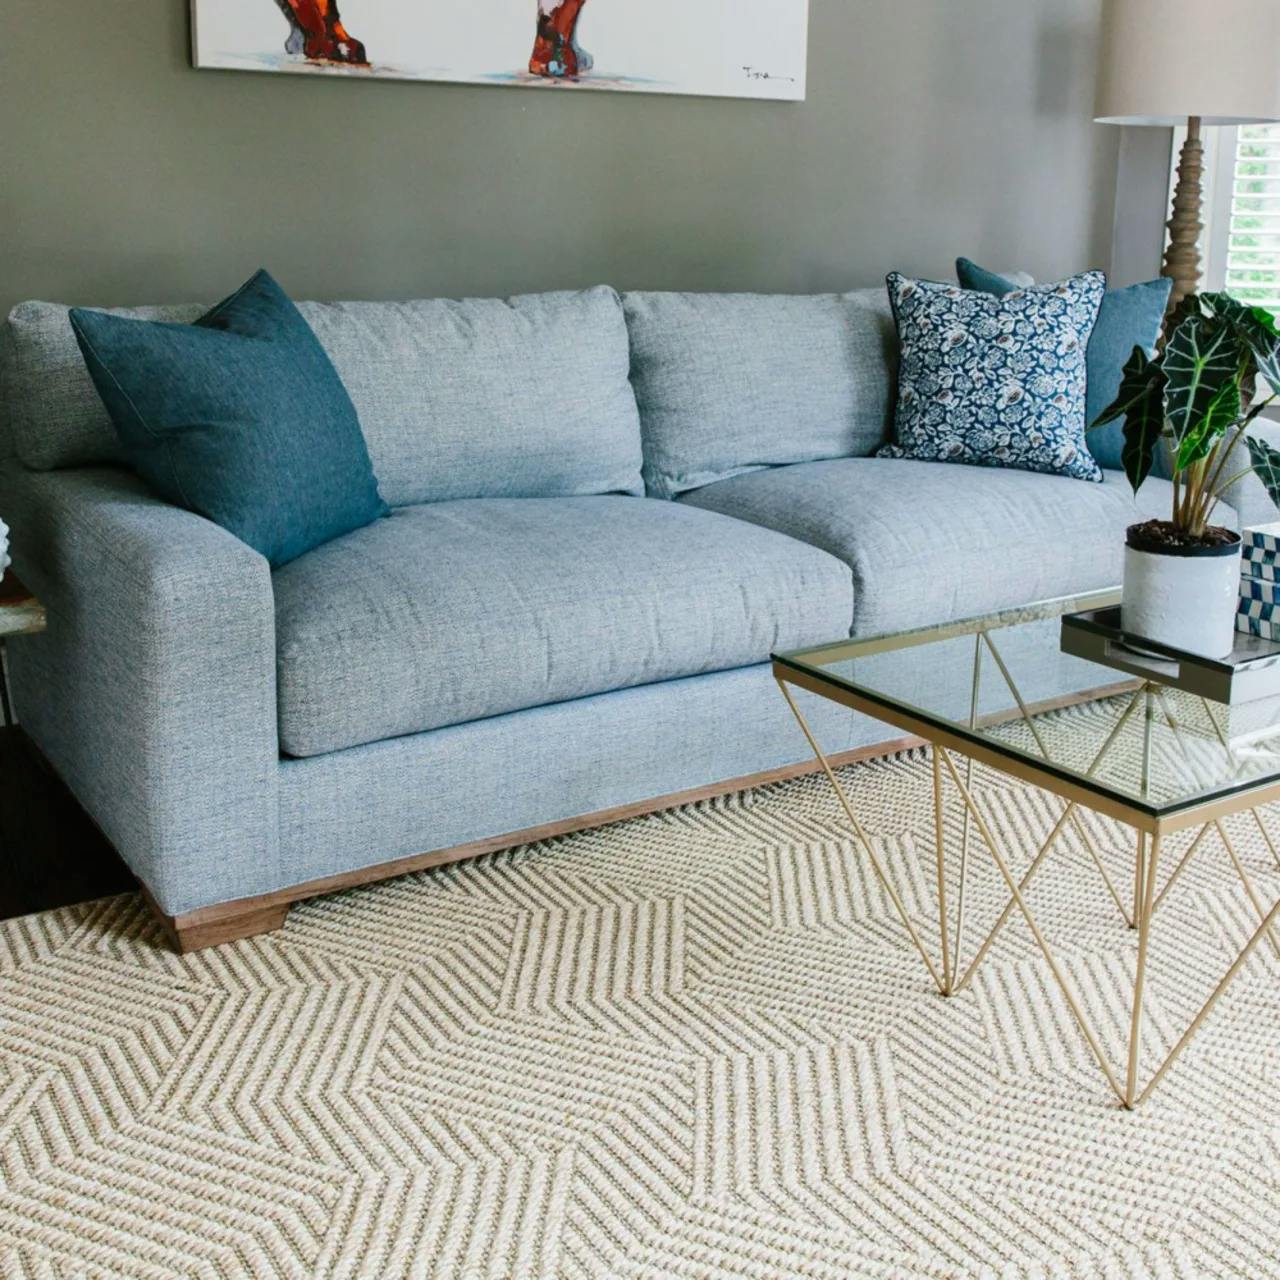 Helsinki Canvas sisal rug in transitional living room